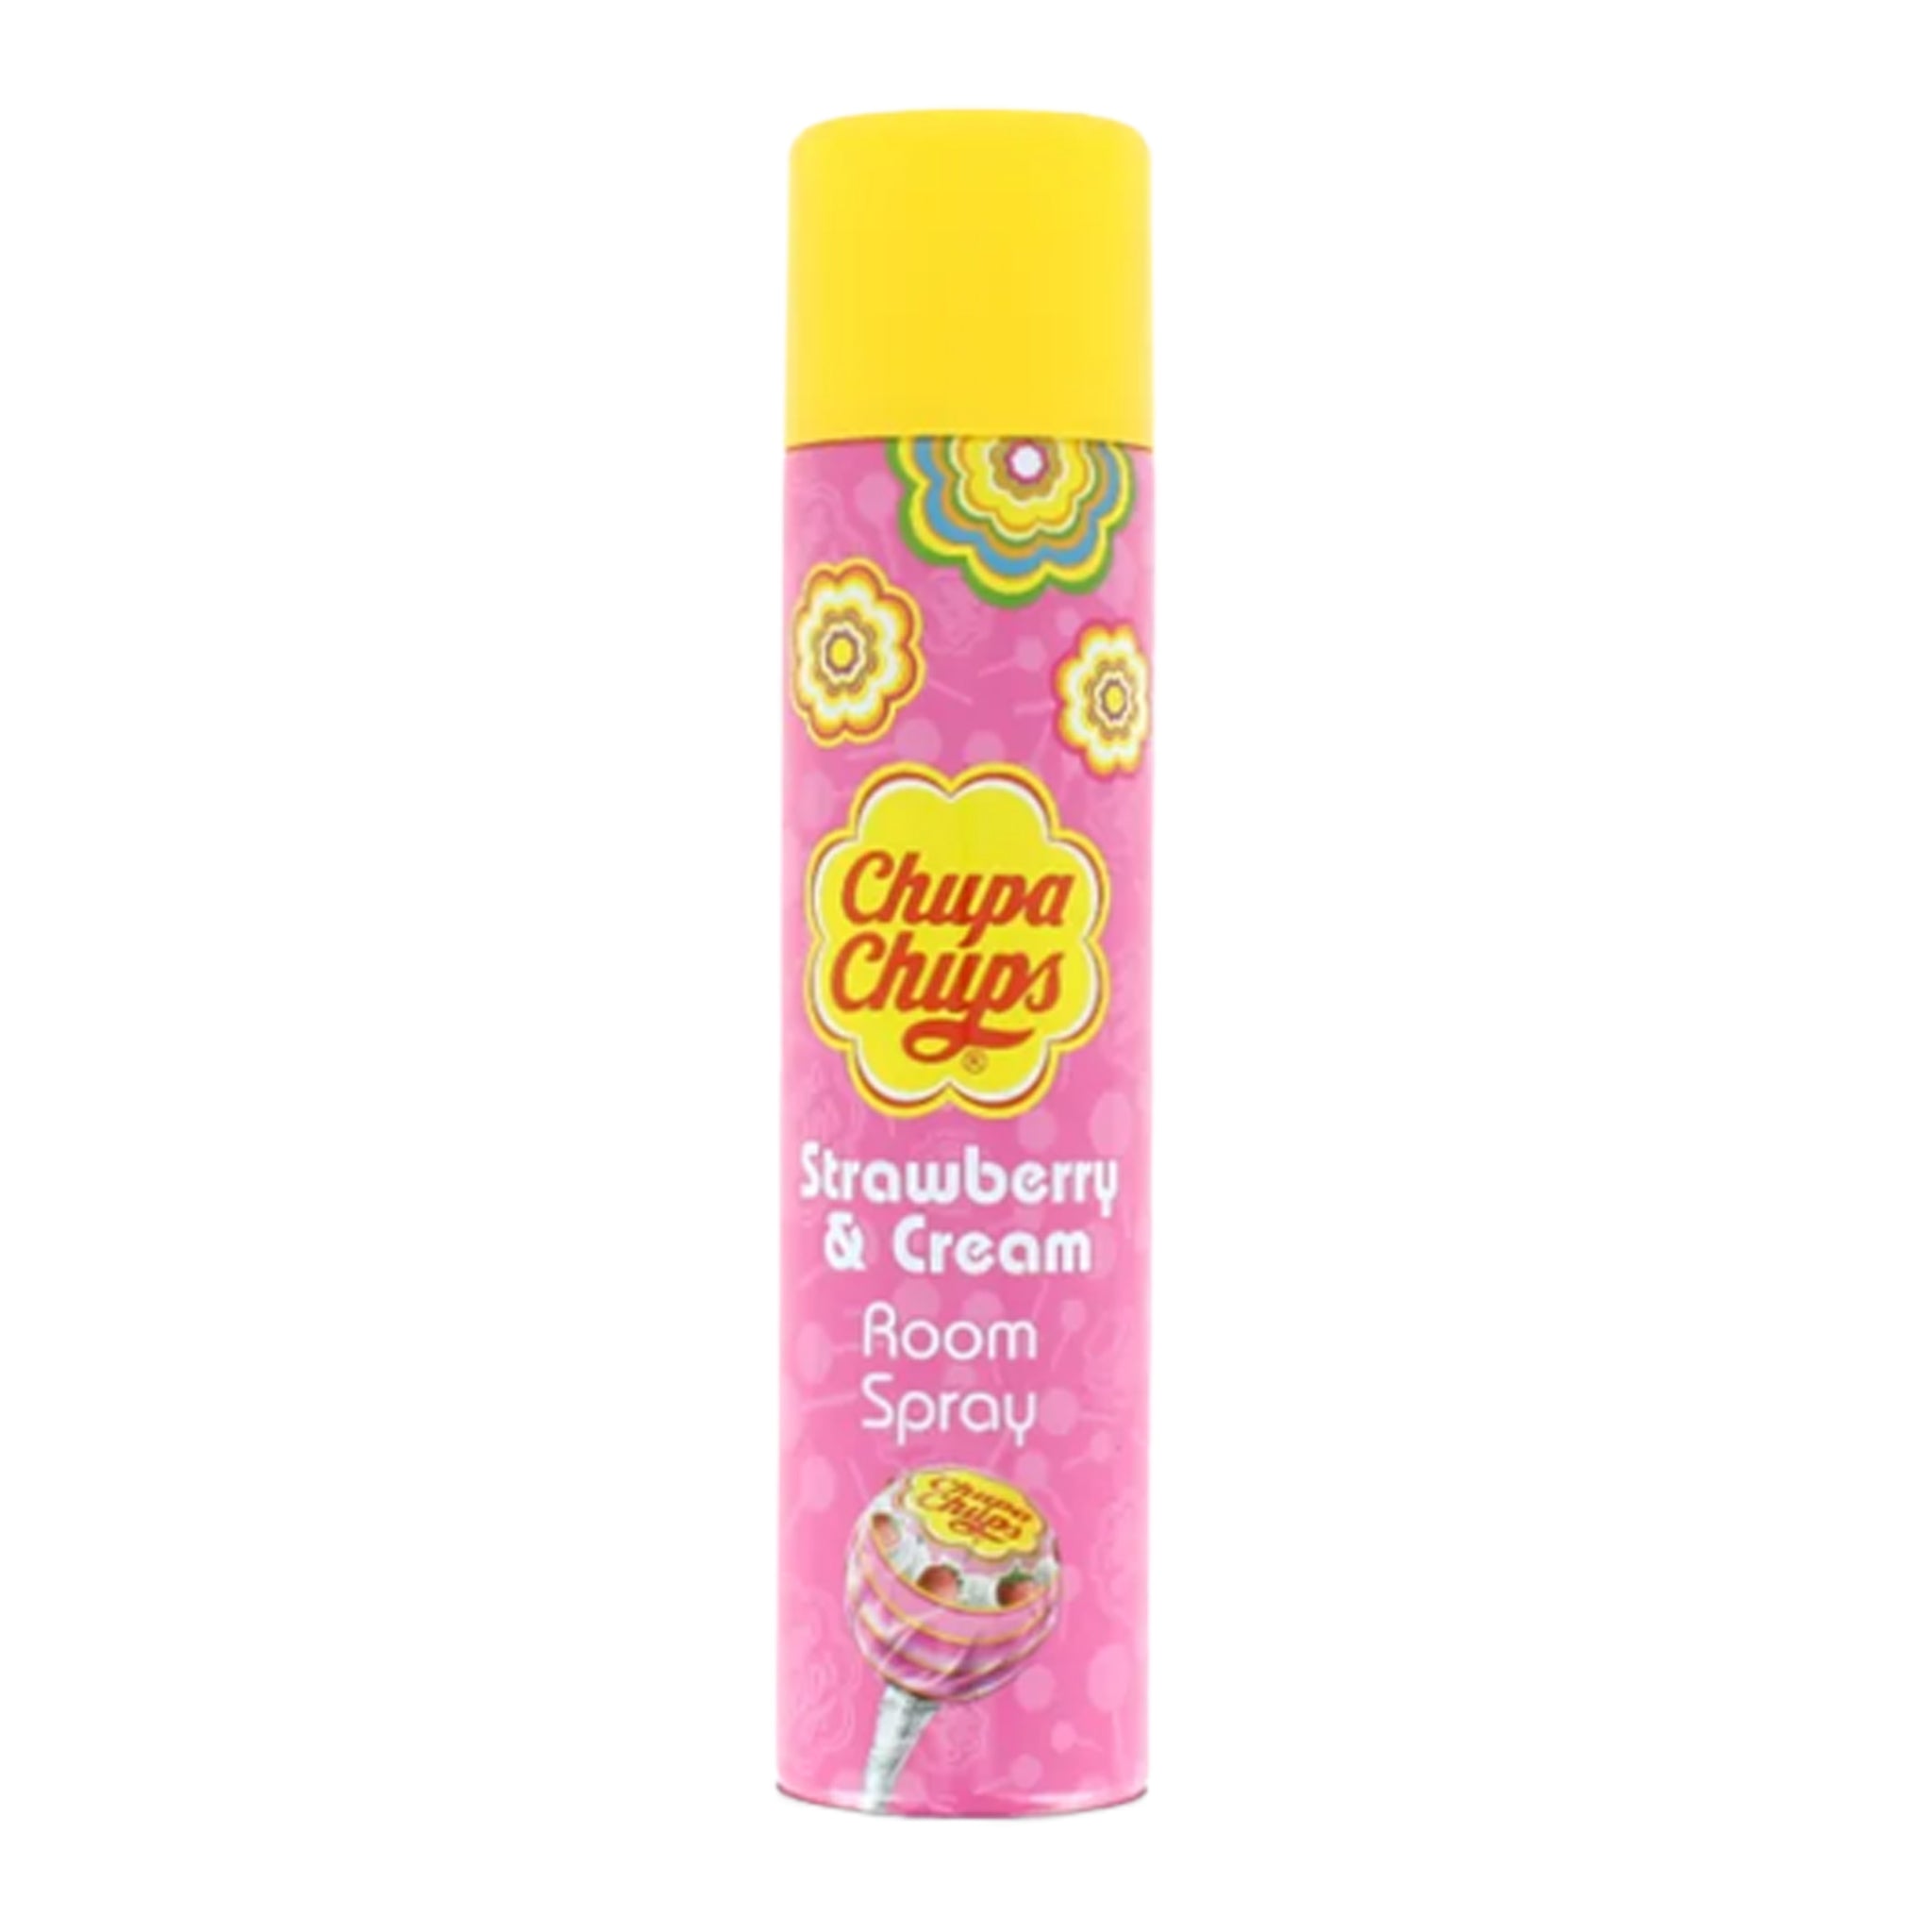 Chupa Chups Room Spray Strawberry ספריי בישום צ'ופה בריח תות